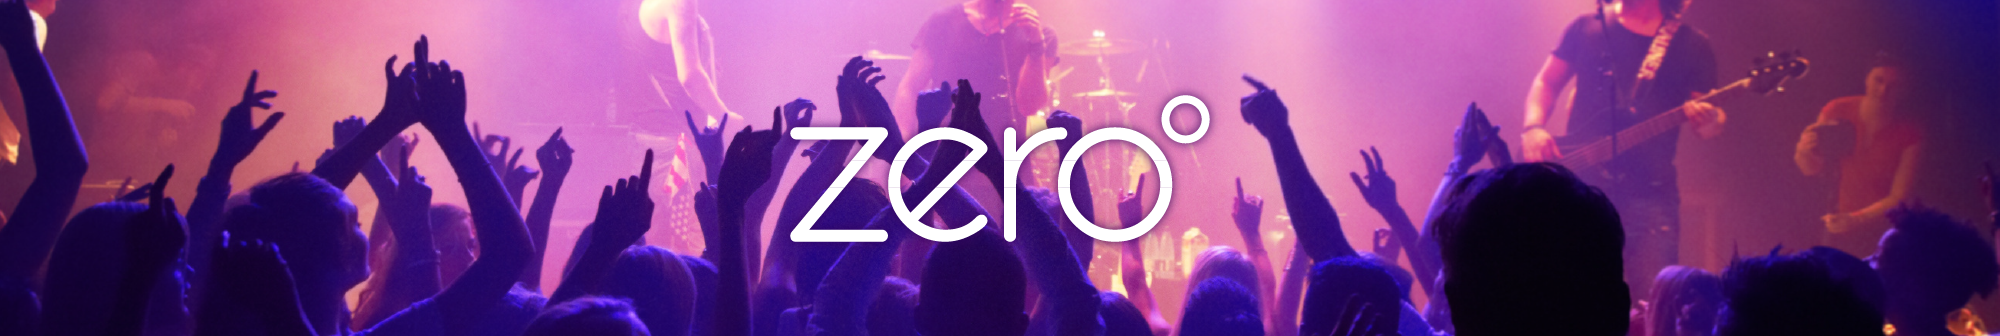 Zero Degrees logo header image